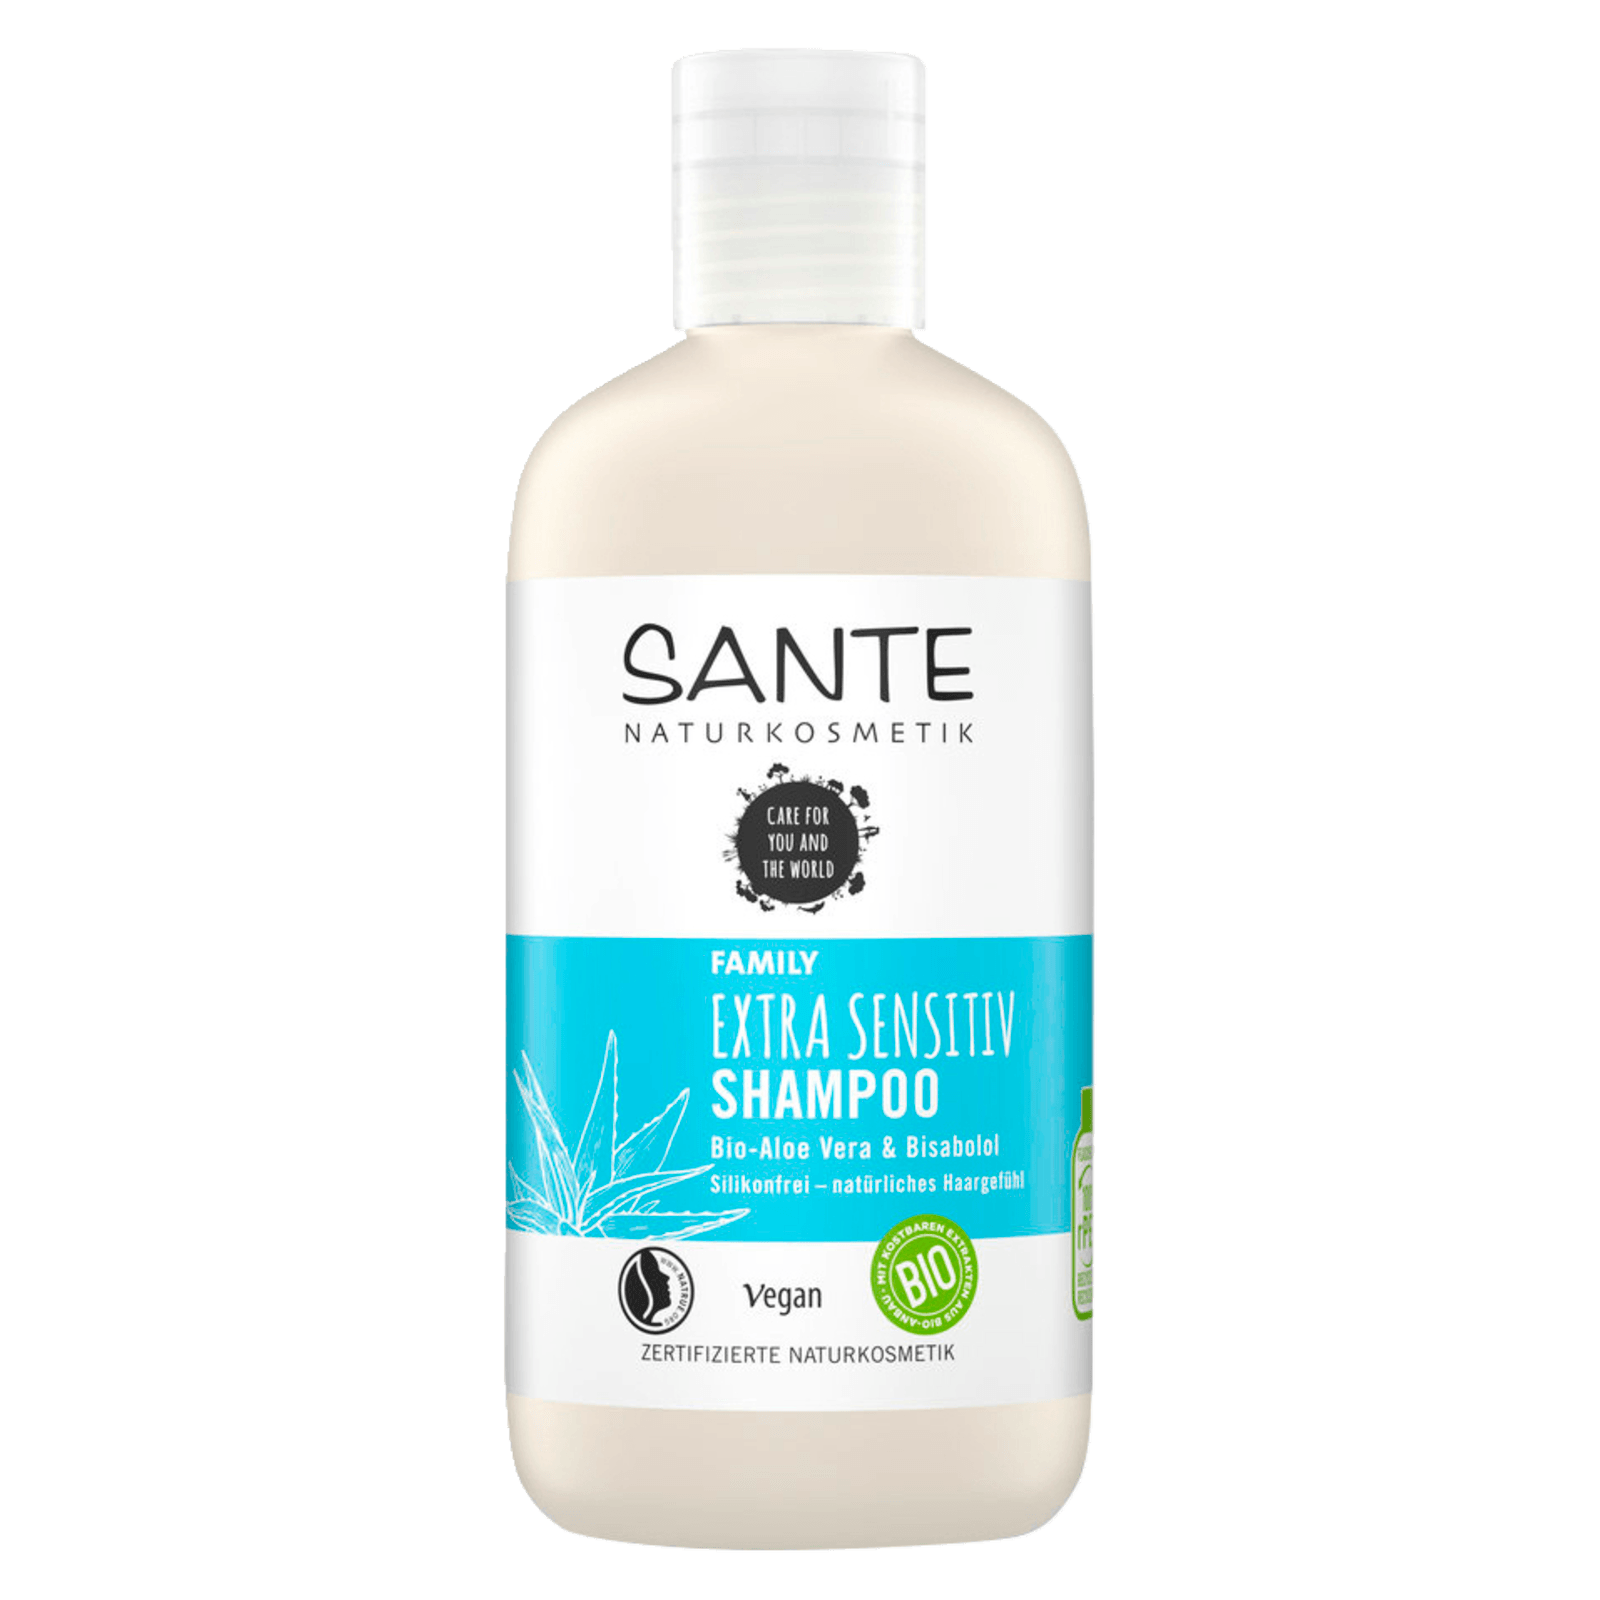 Shampoo bei Sensitiv Naturkosmetik 250ml Family online bestellen! Sante Extra REWE